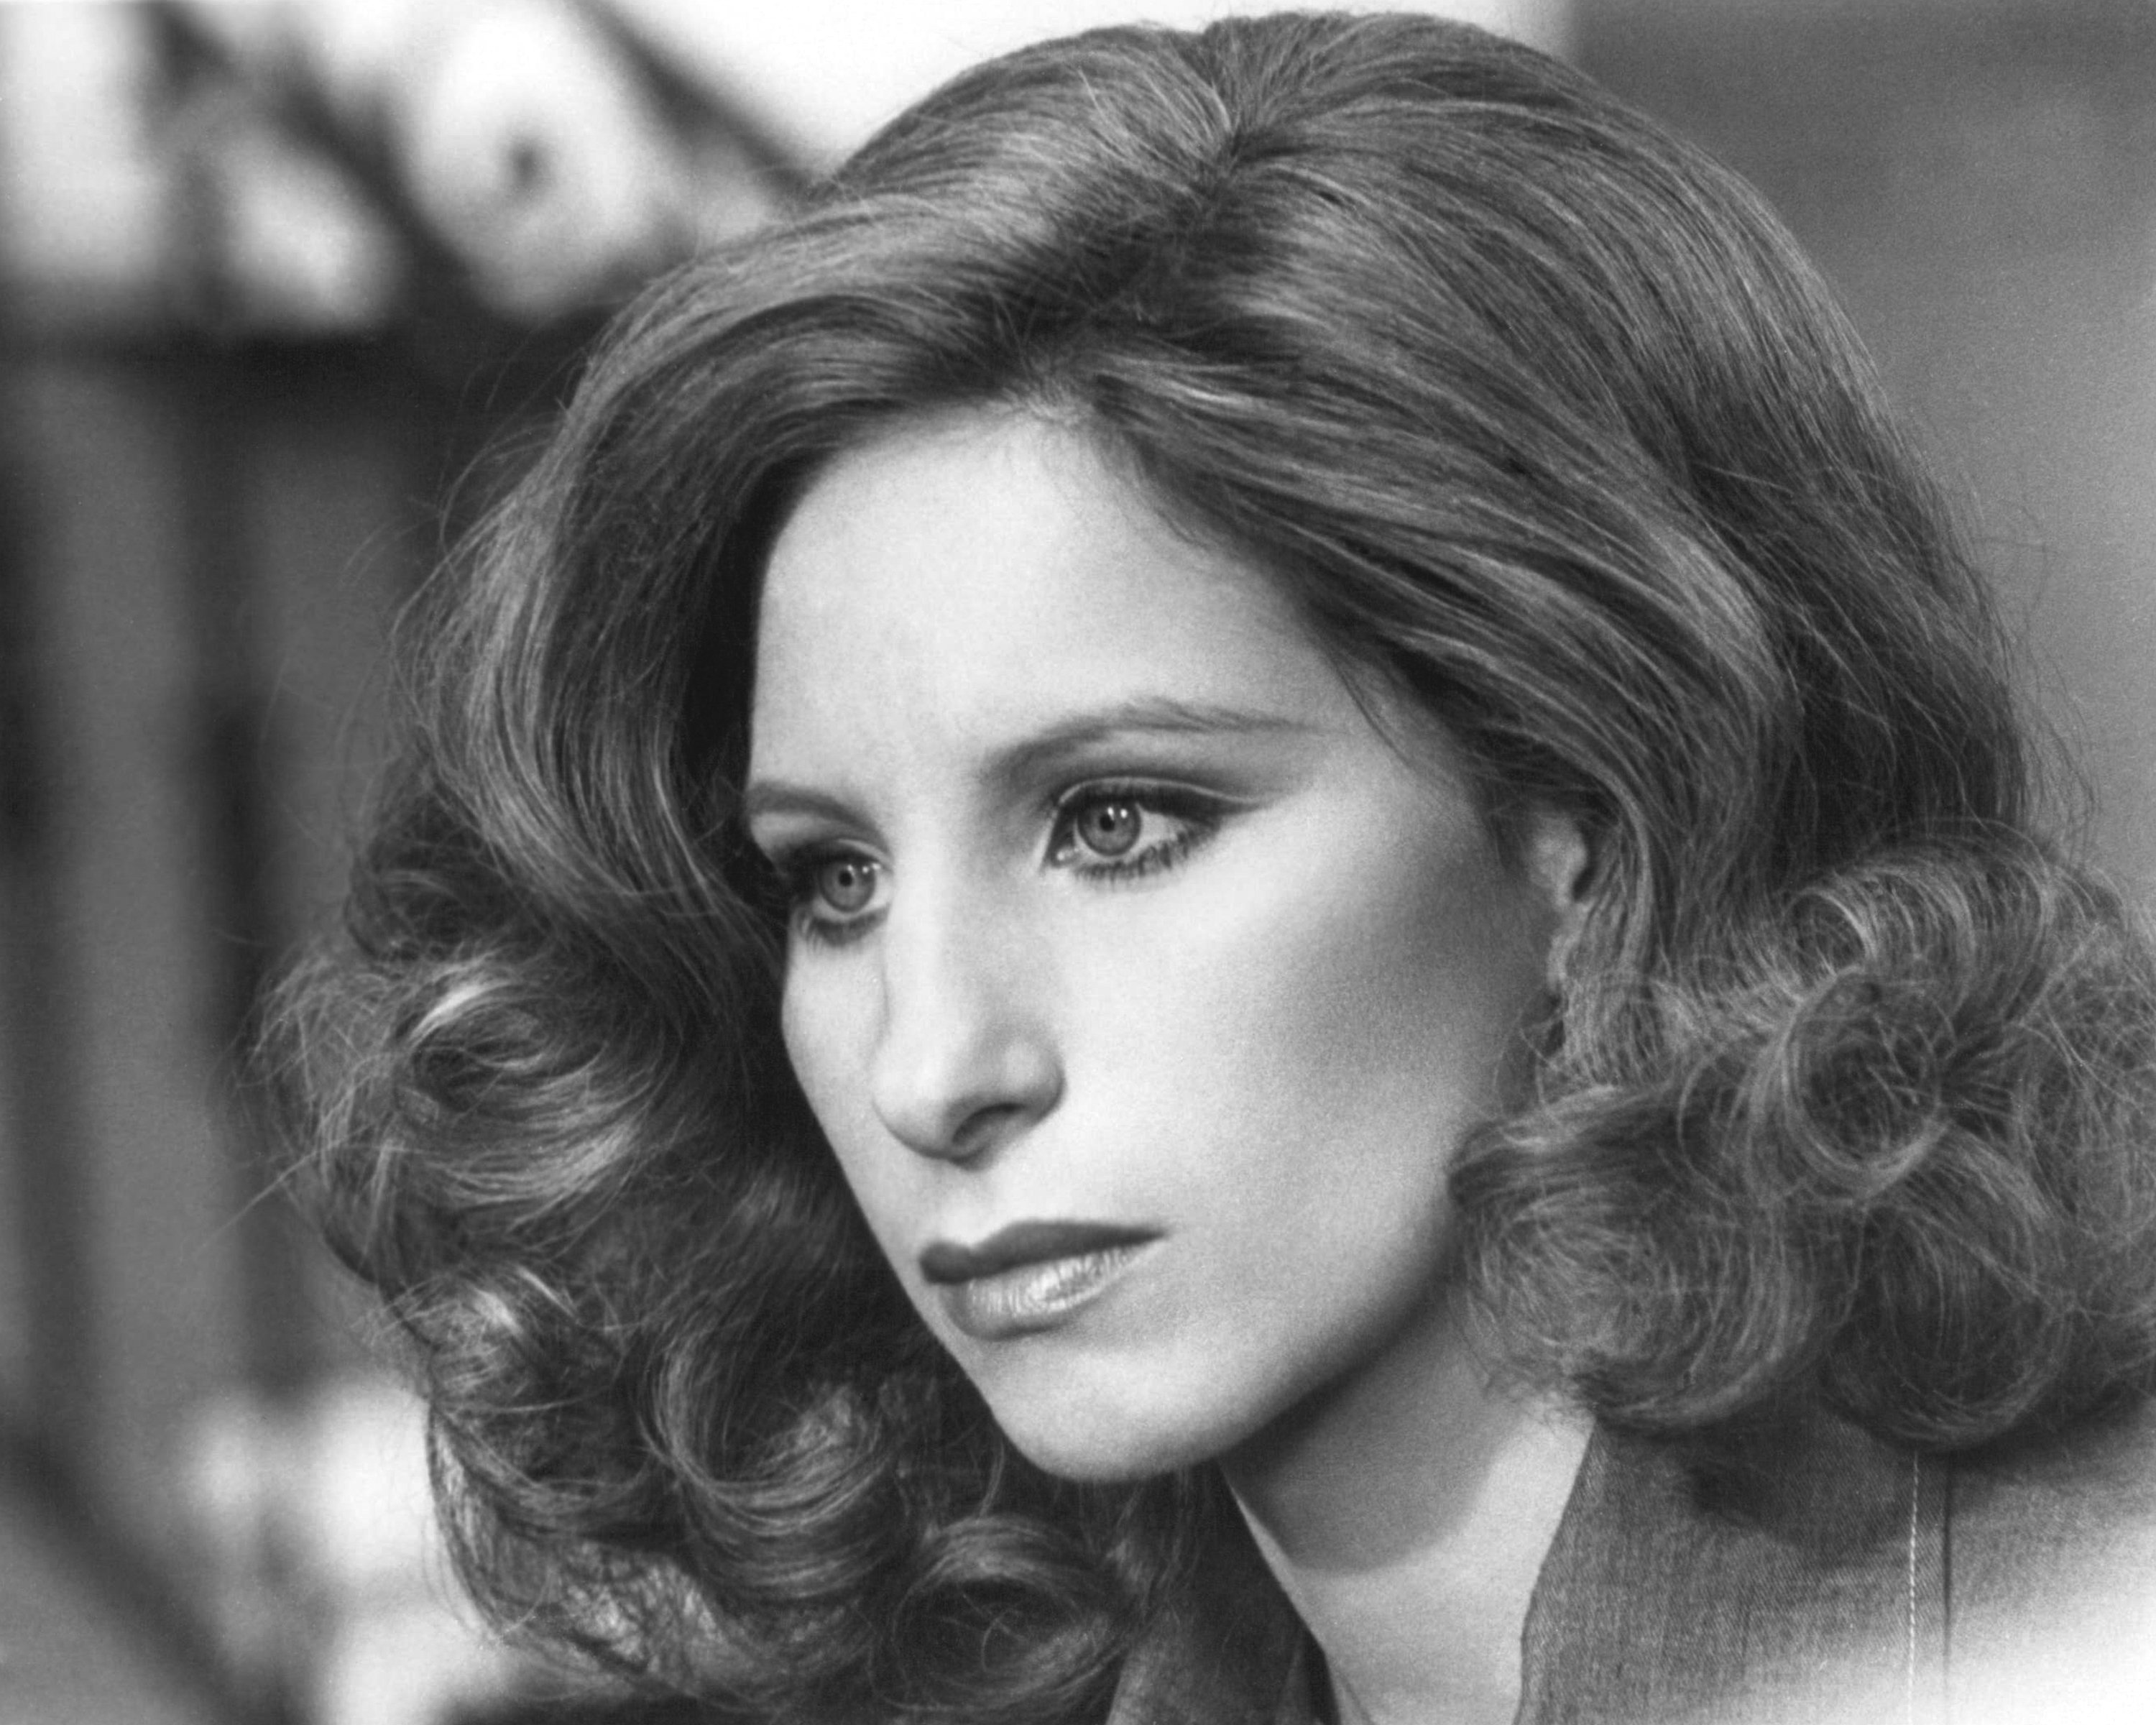 Barbra Streisand with curly hair